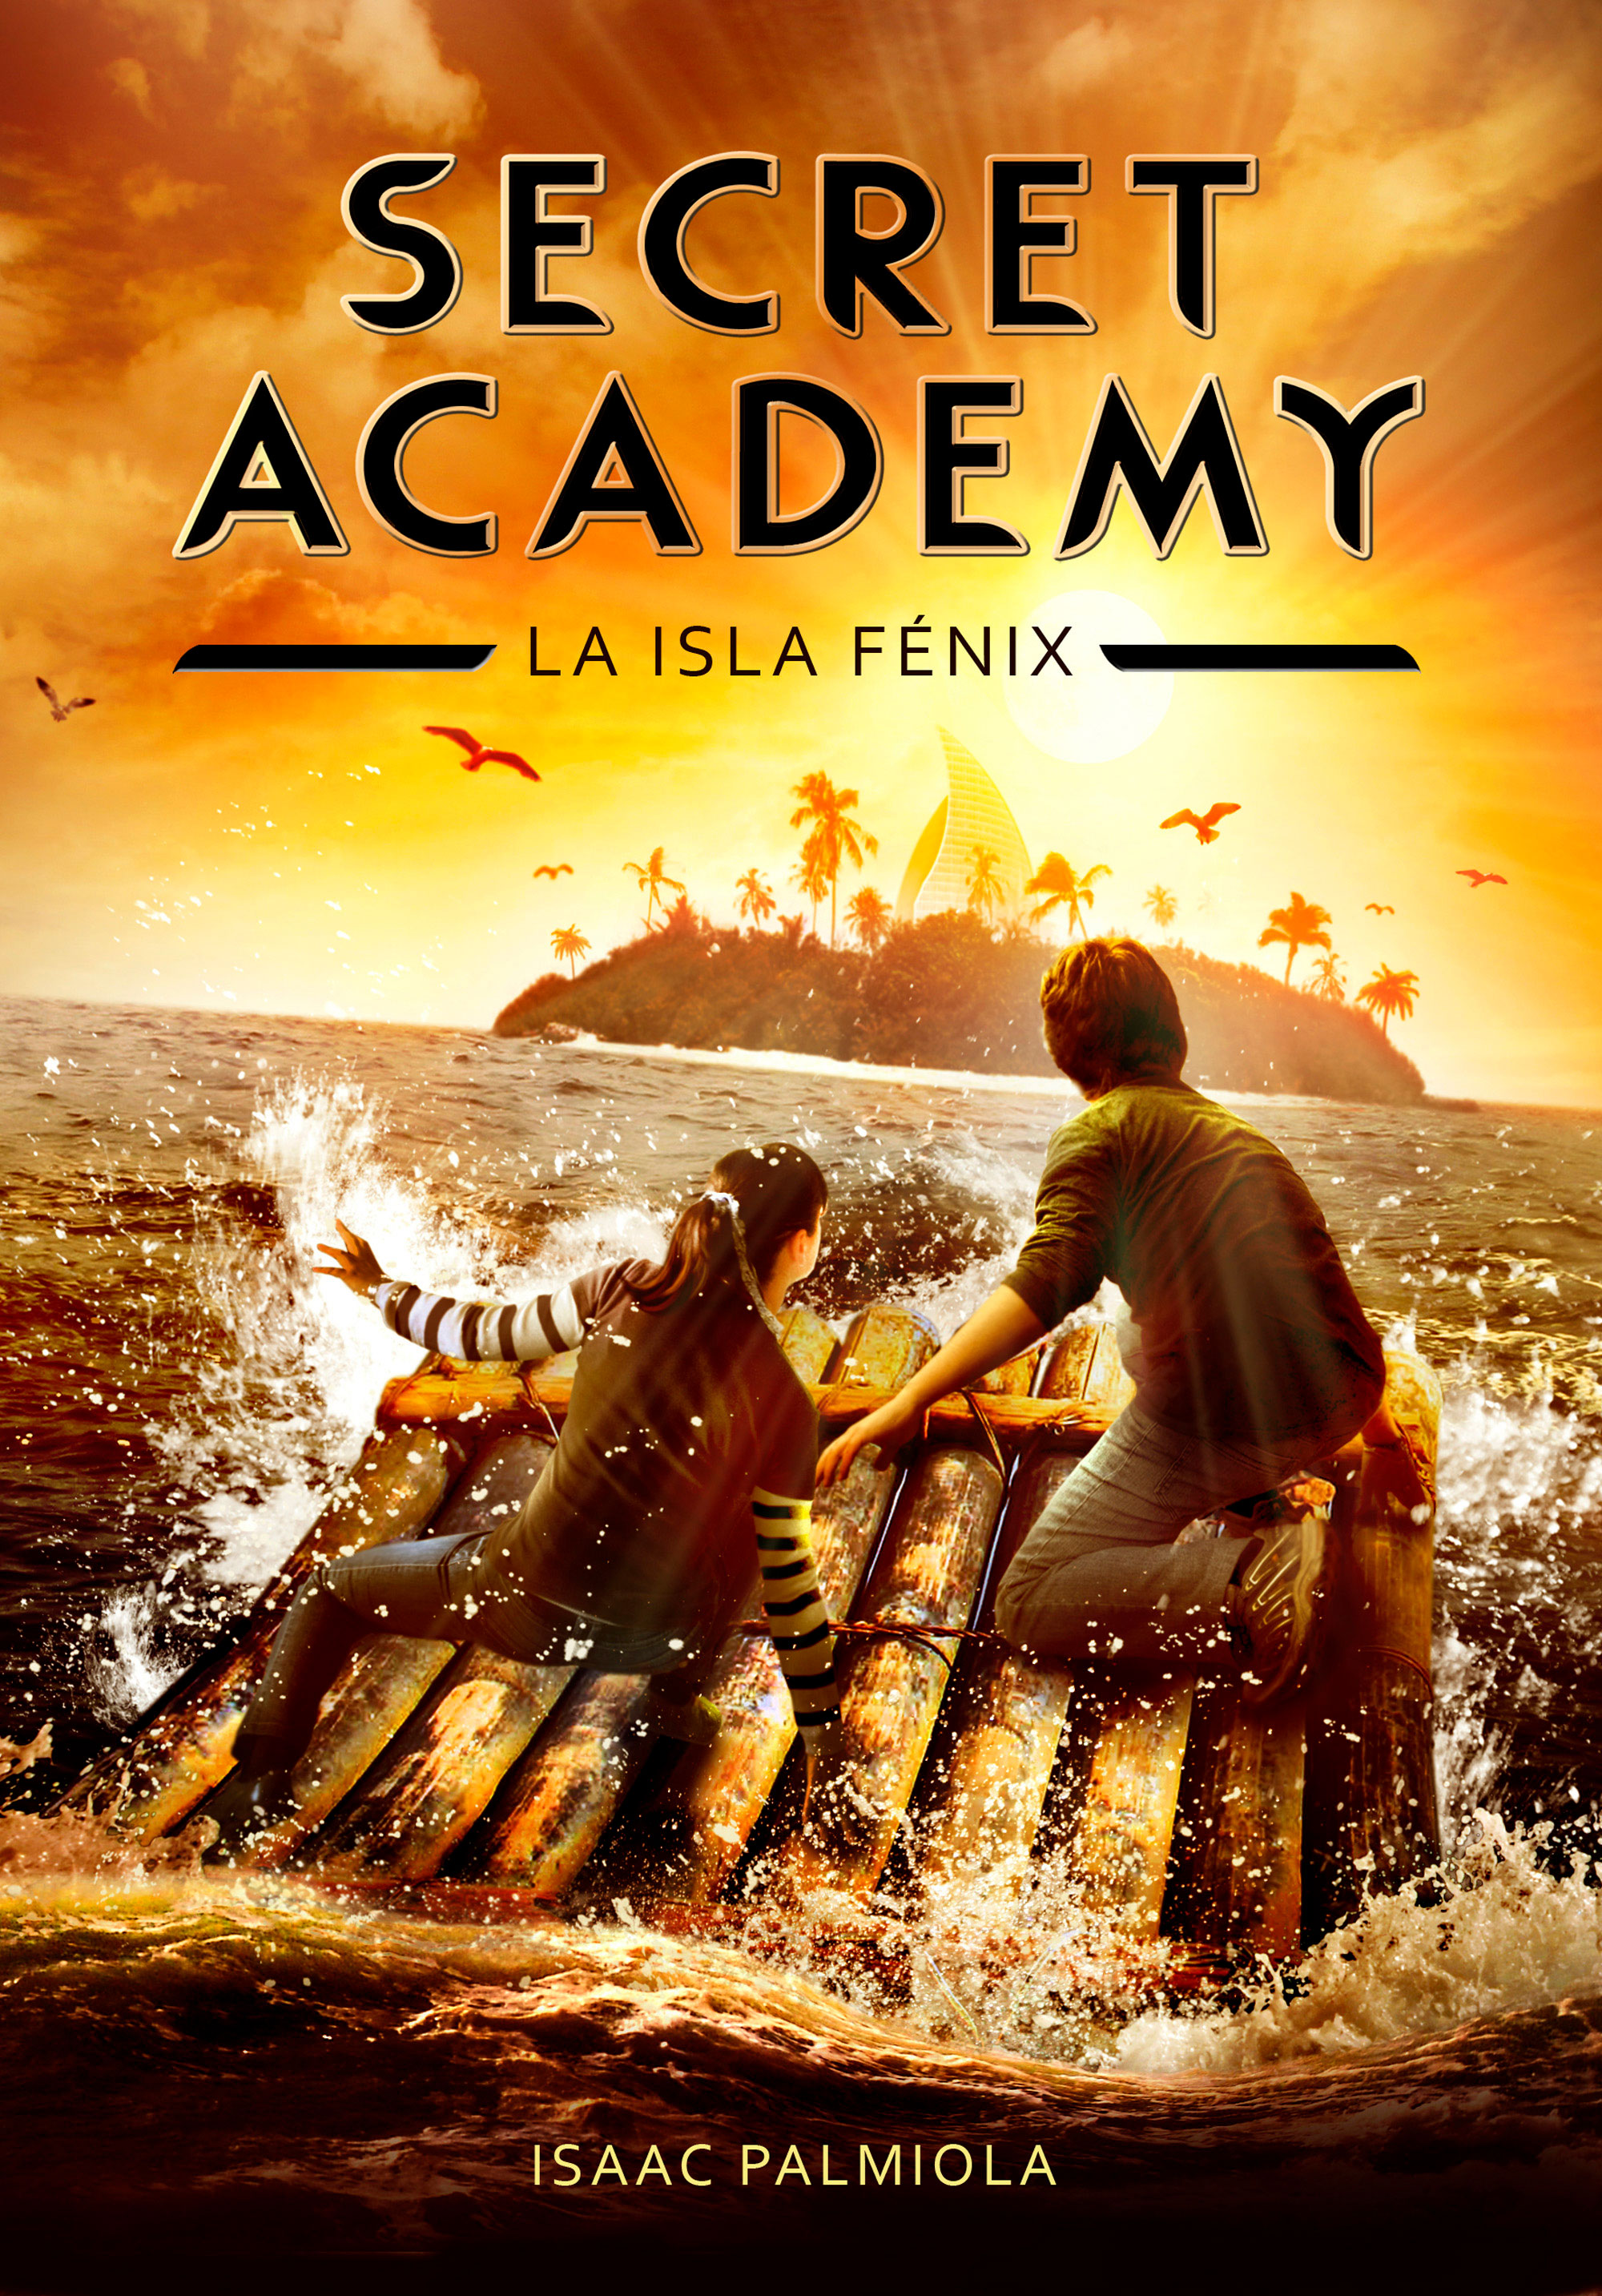 La isla Fnix - Secret Academy 1